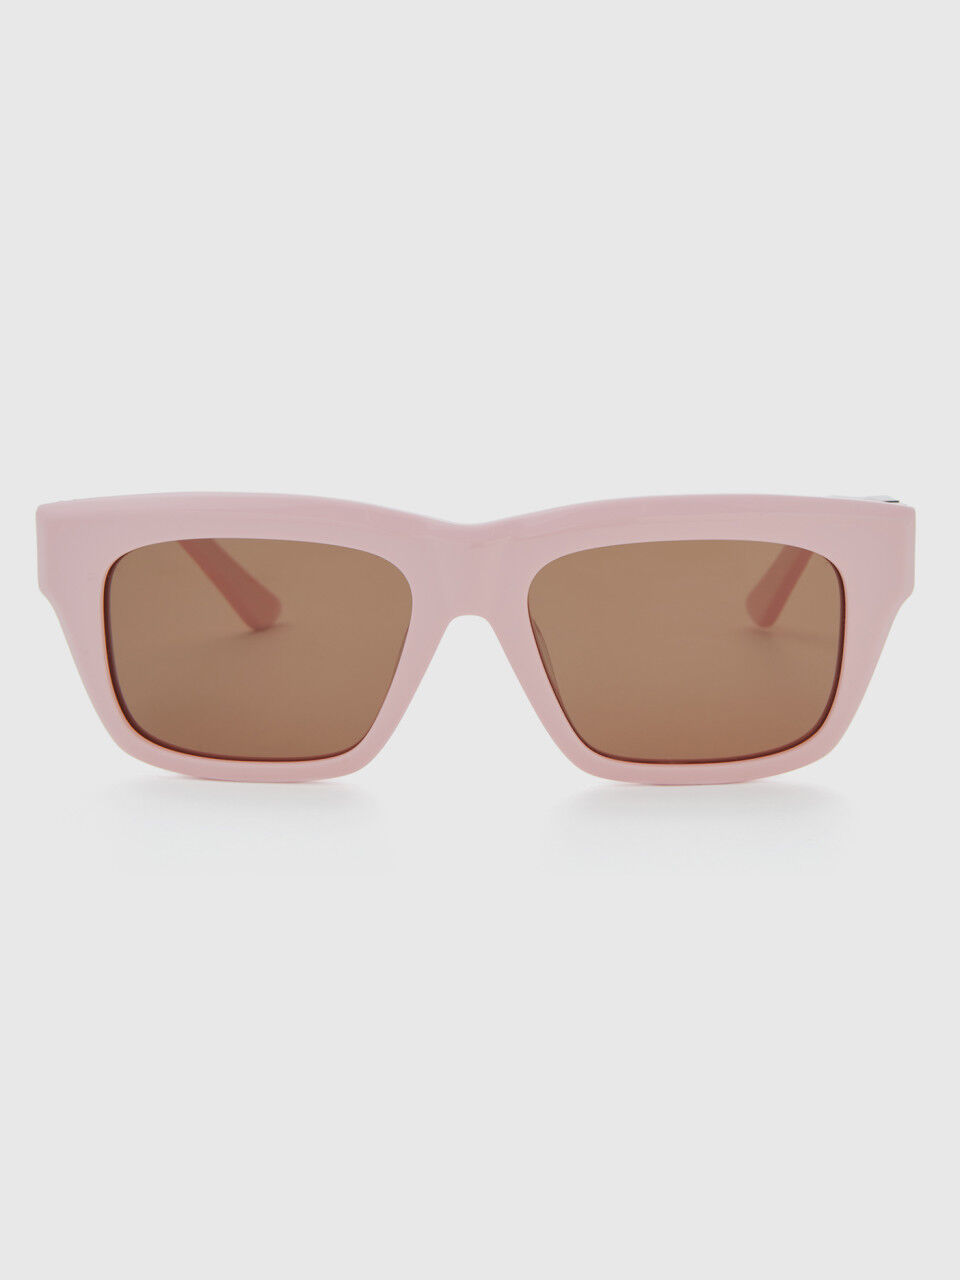 Pink rectangular sunglasses